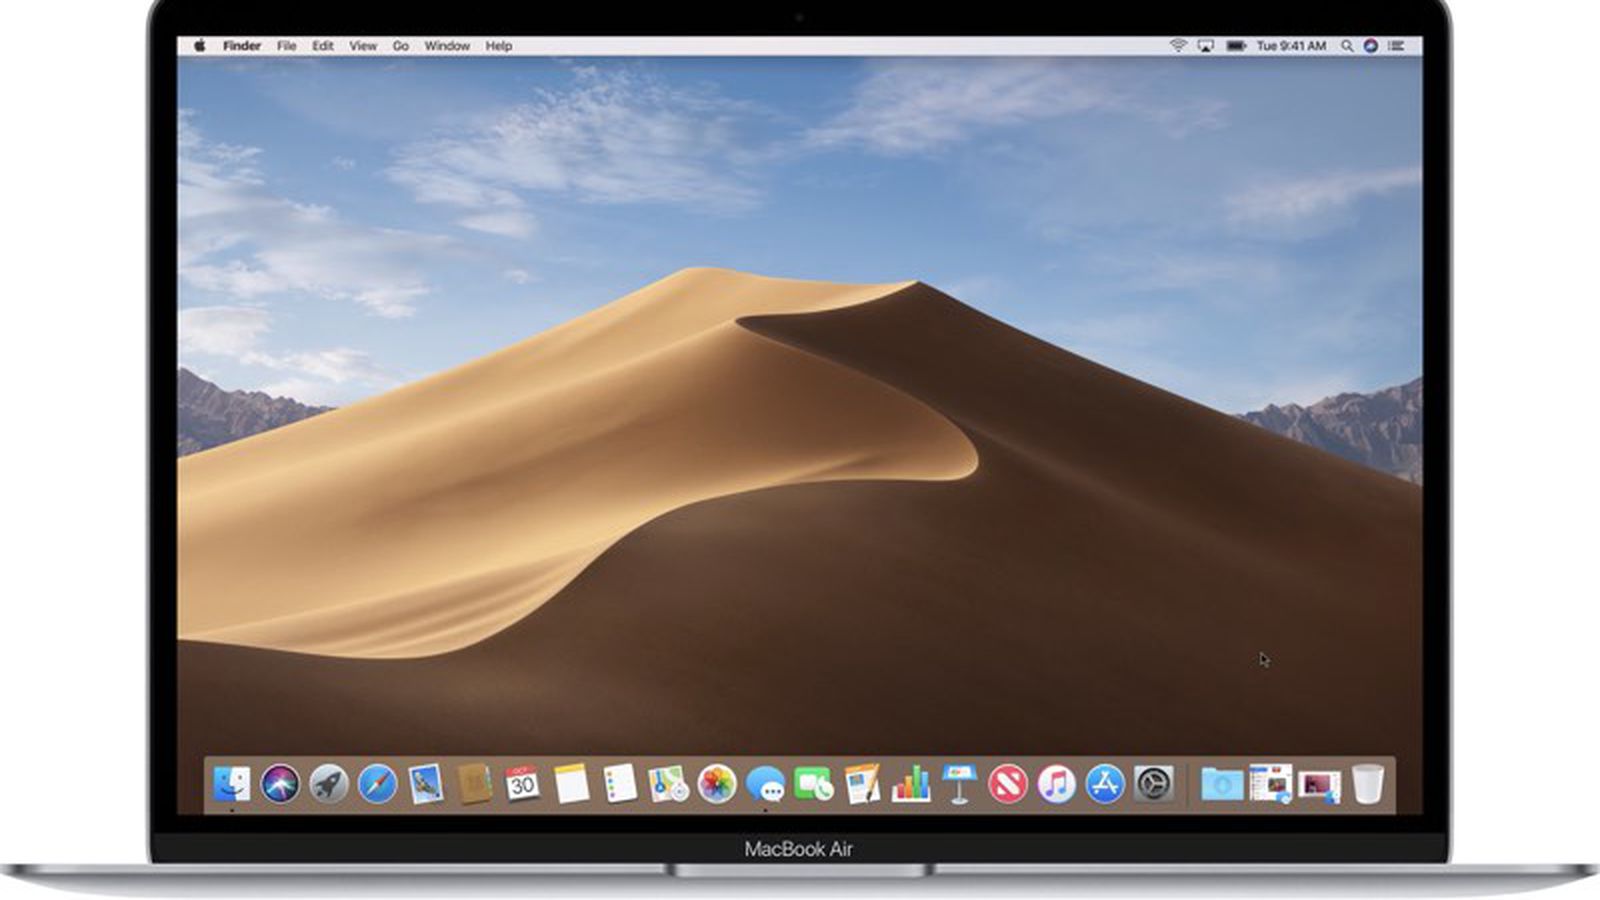 Dune 2 for mac